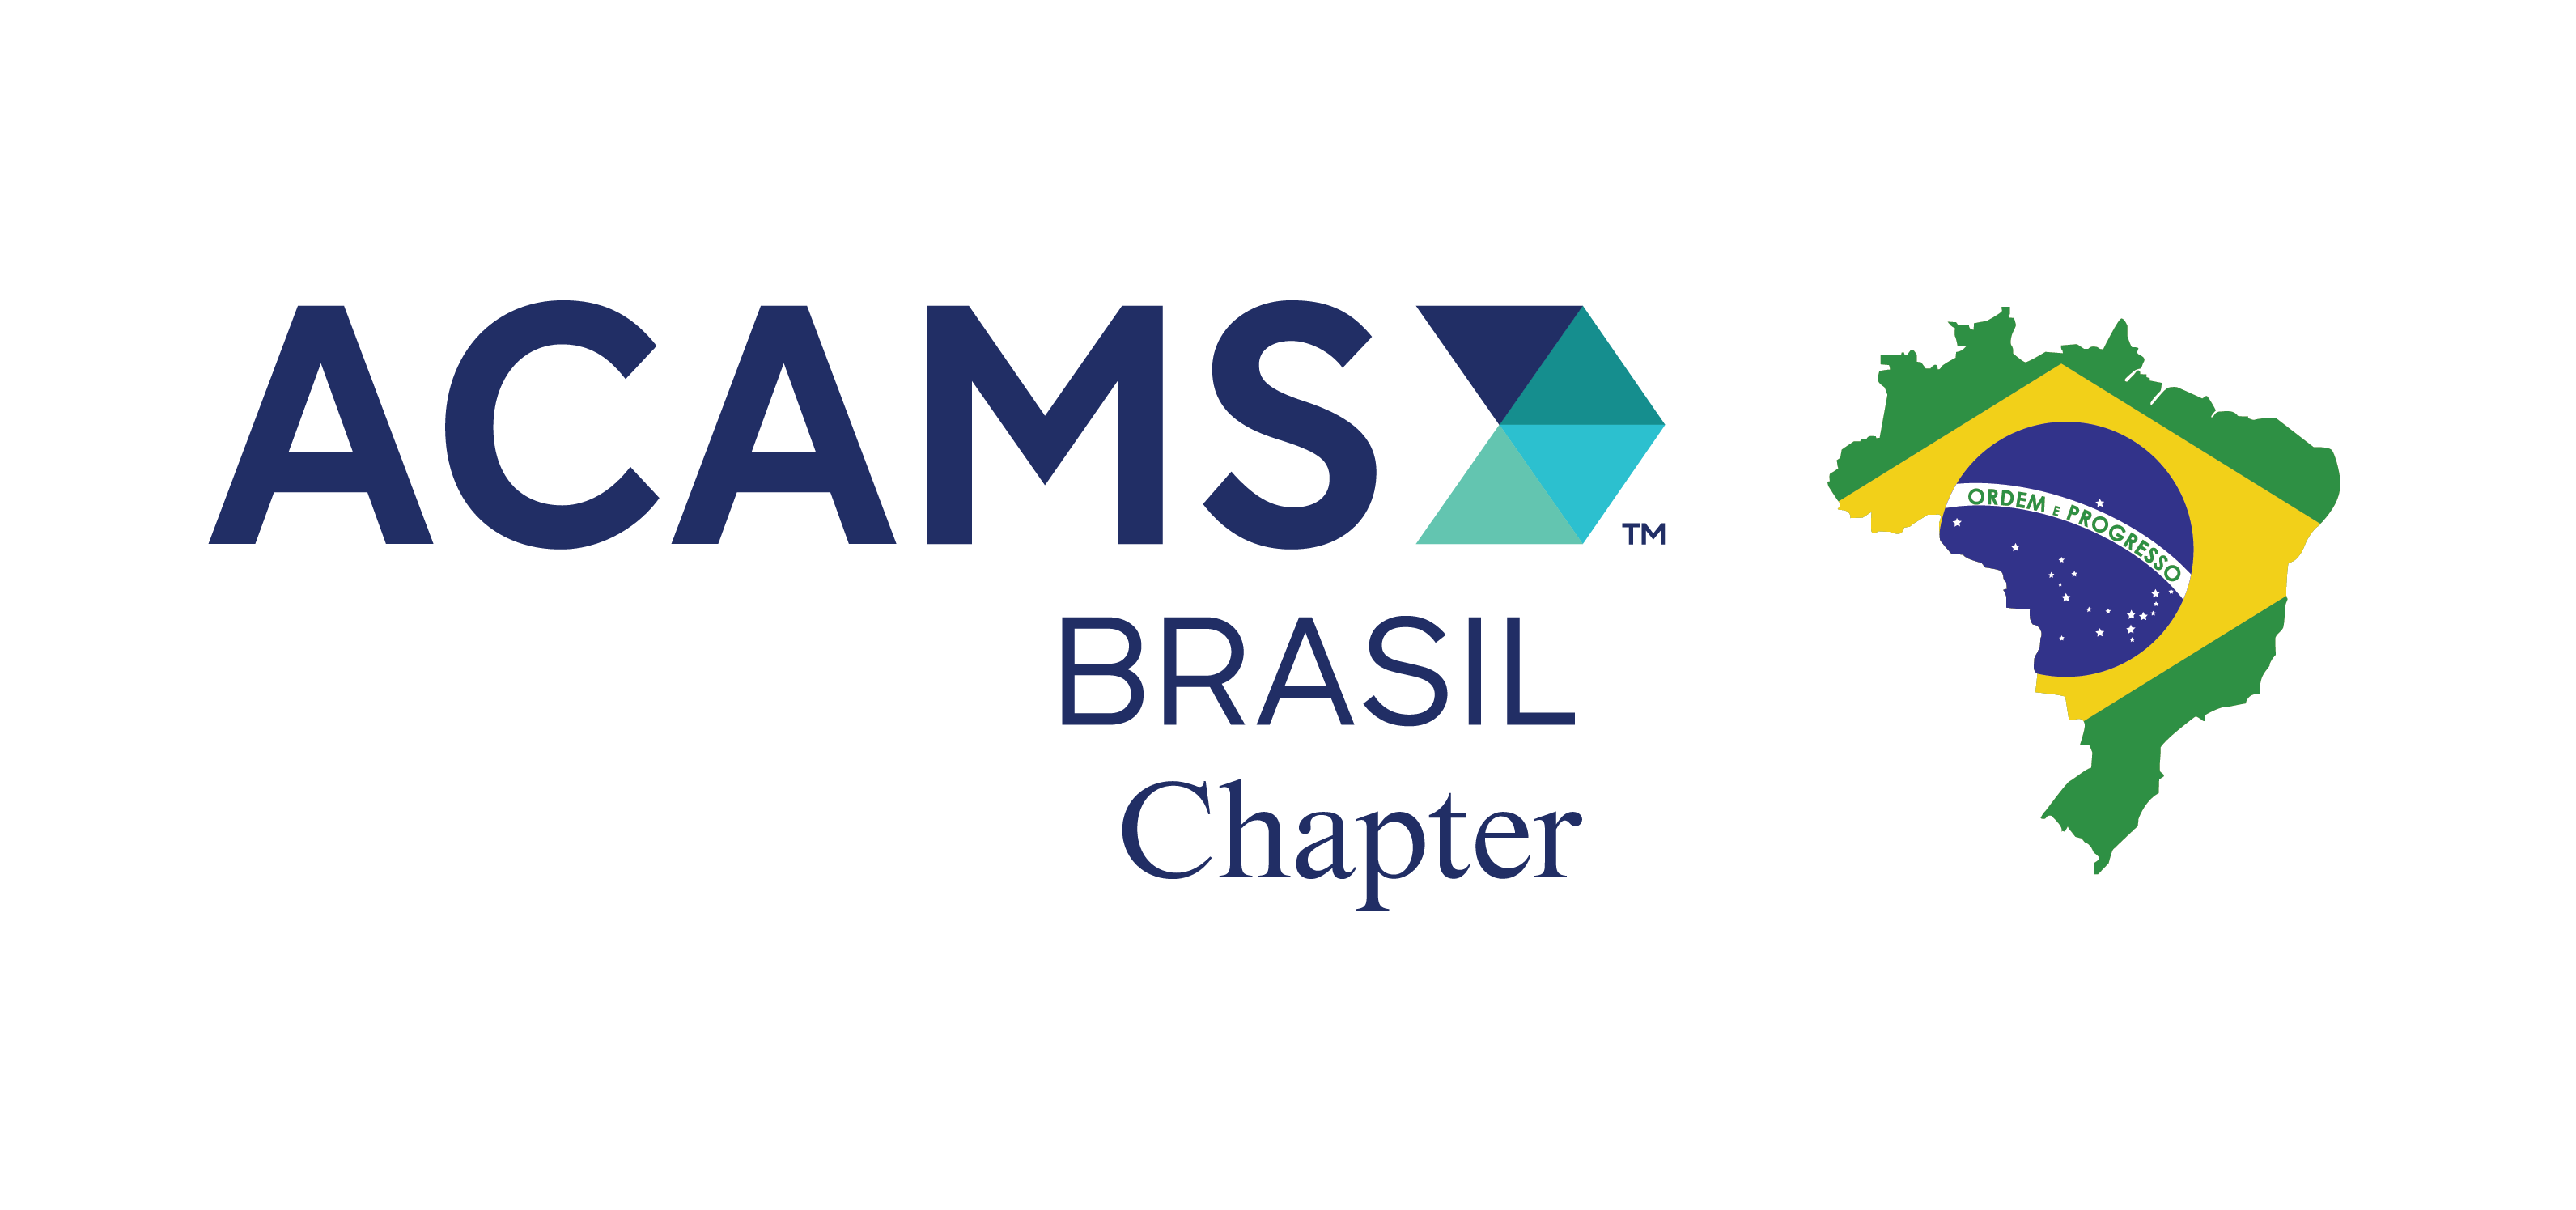 ACAMS Brazil Chapter